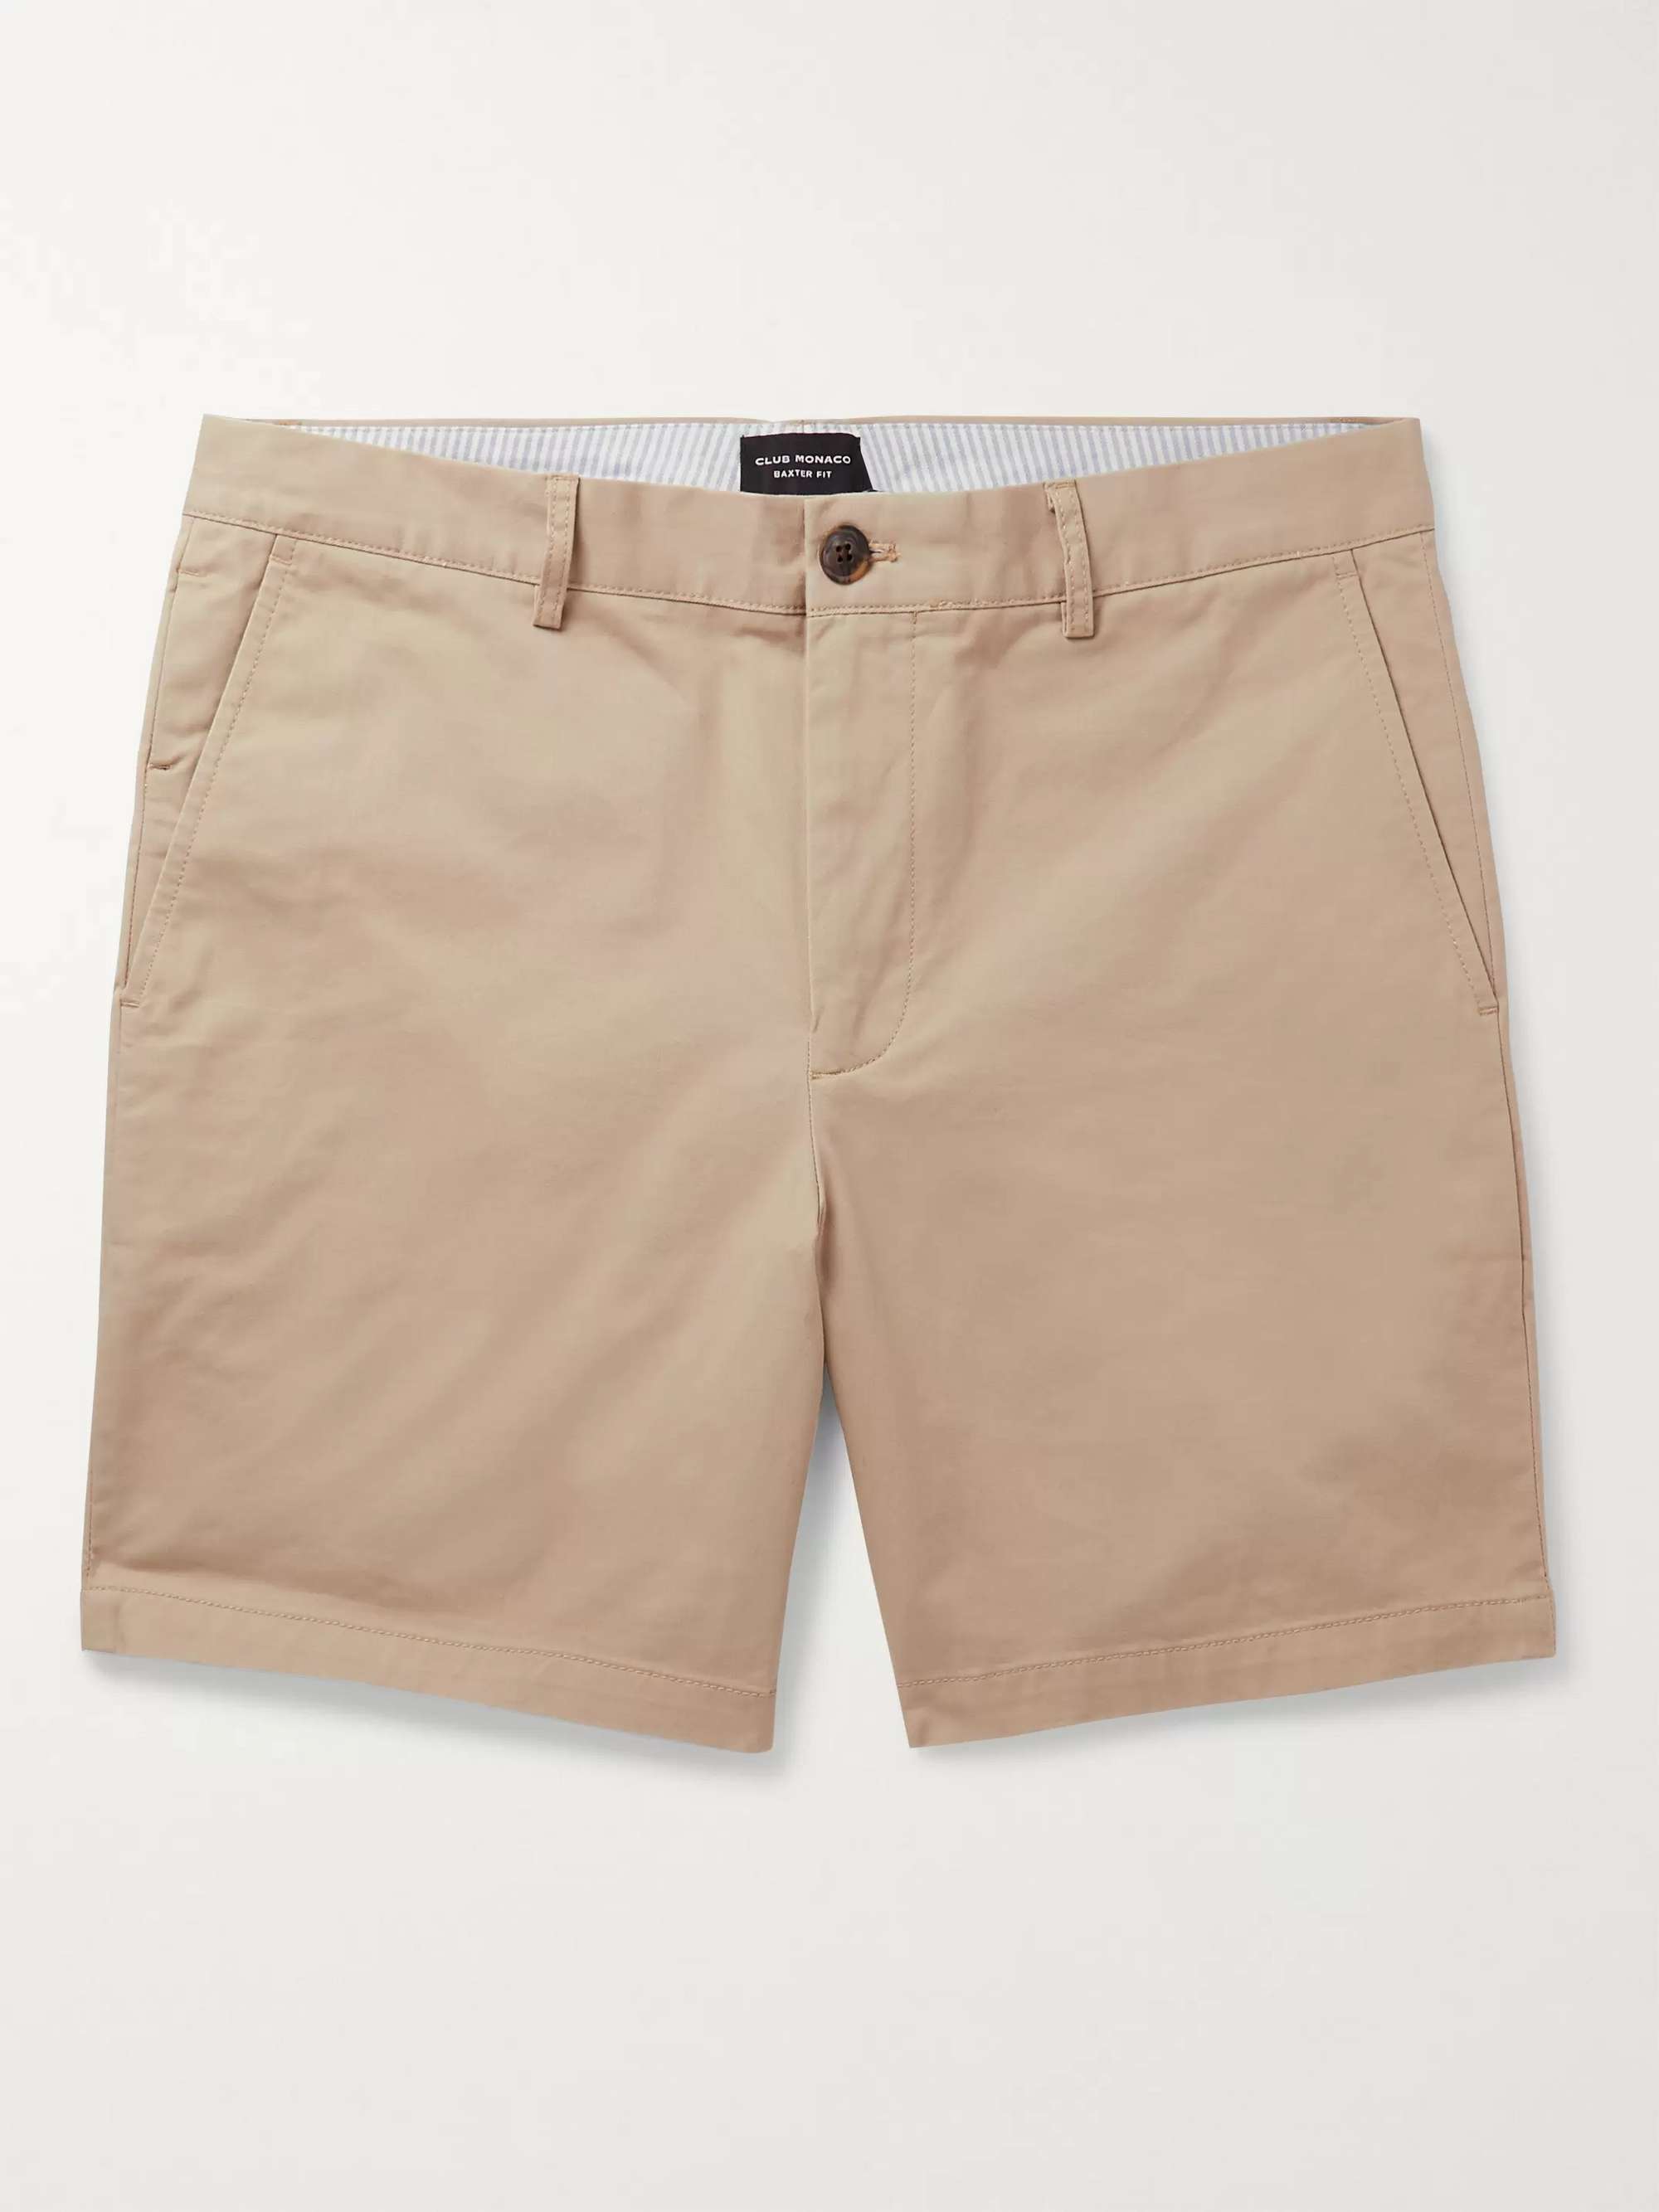 CLUB MONACO Baxter Cotton-Blend Twill Shorts for Men | MR PORTER